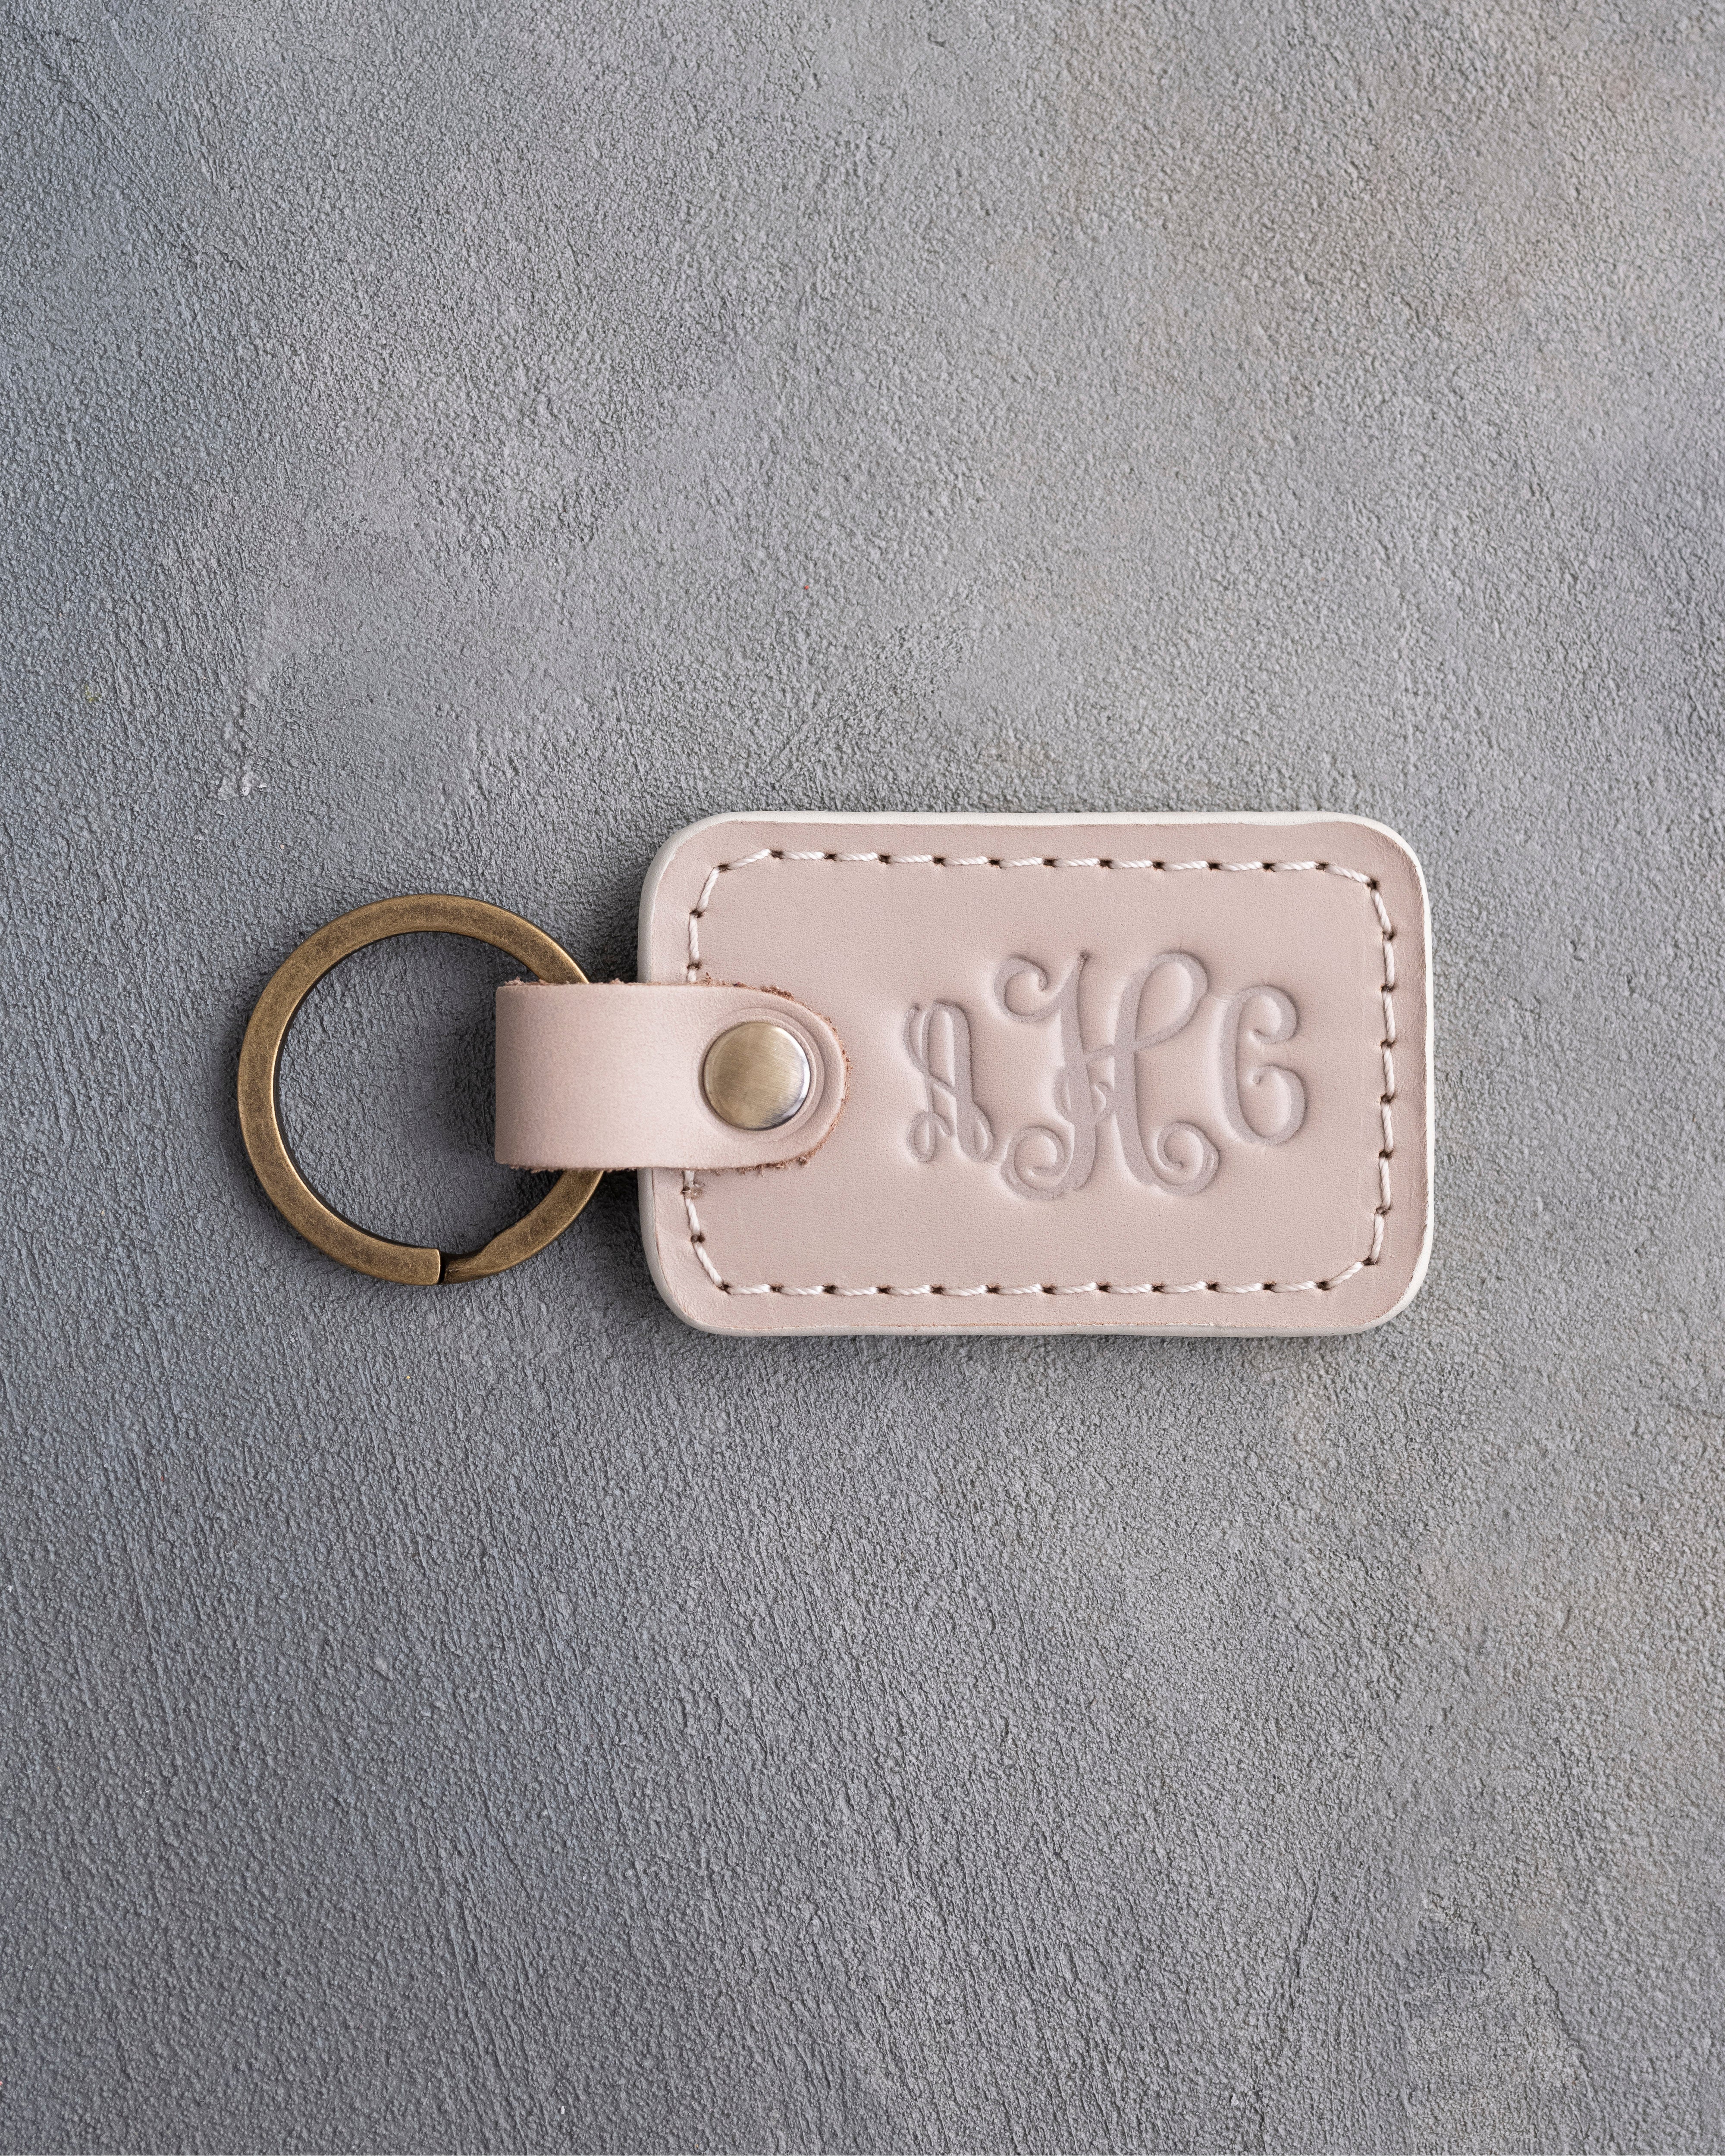 Vine Monogram Keychain in Gray Sand Leather